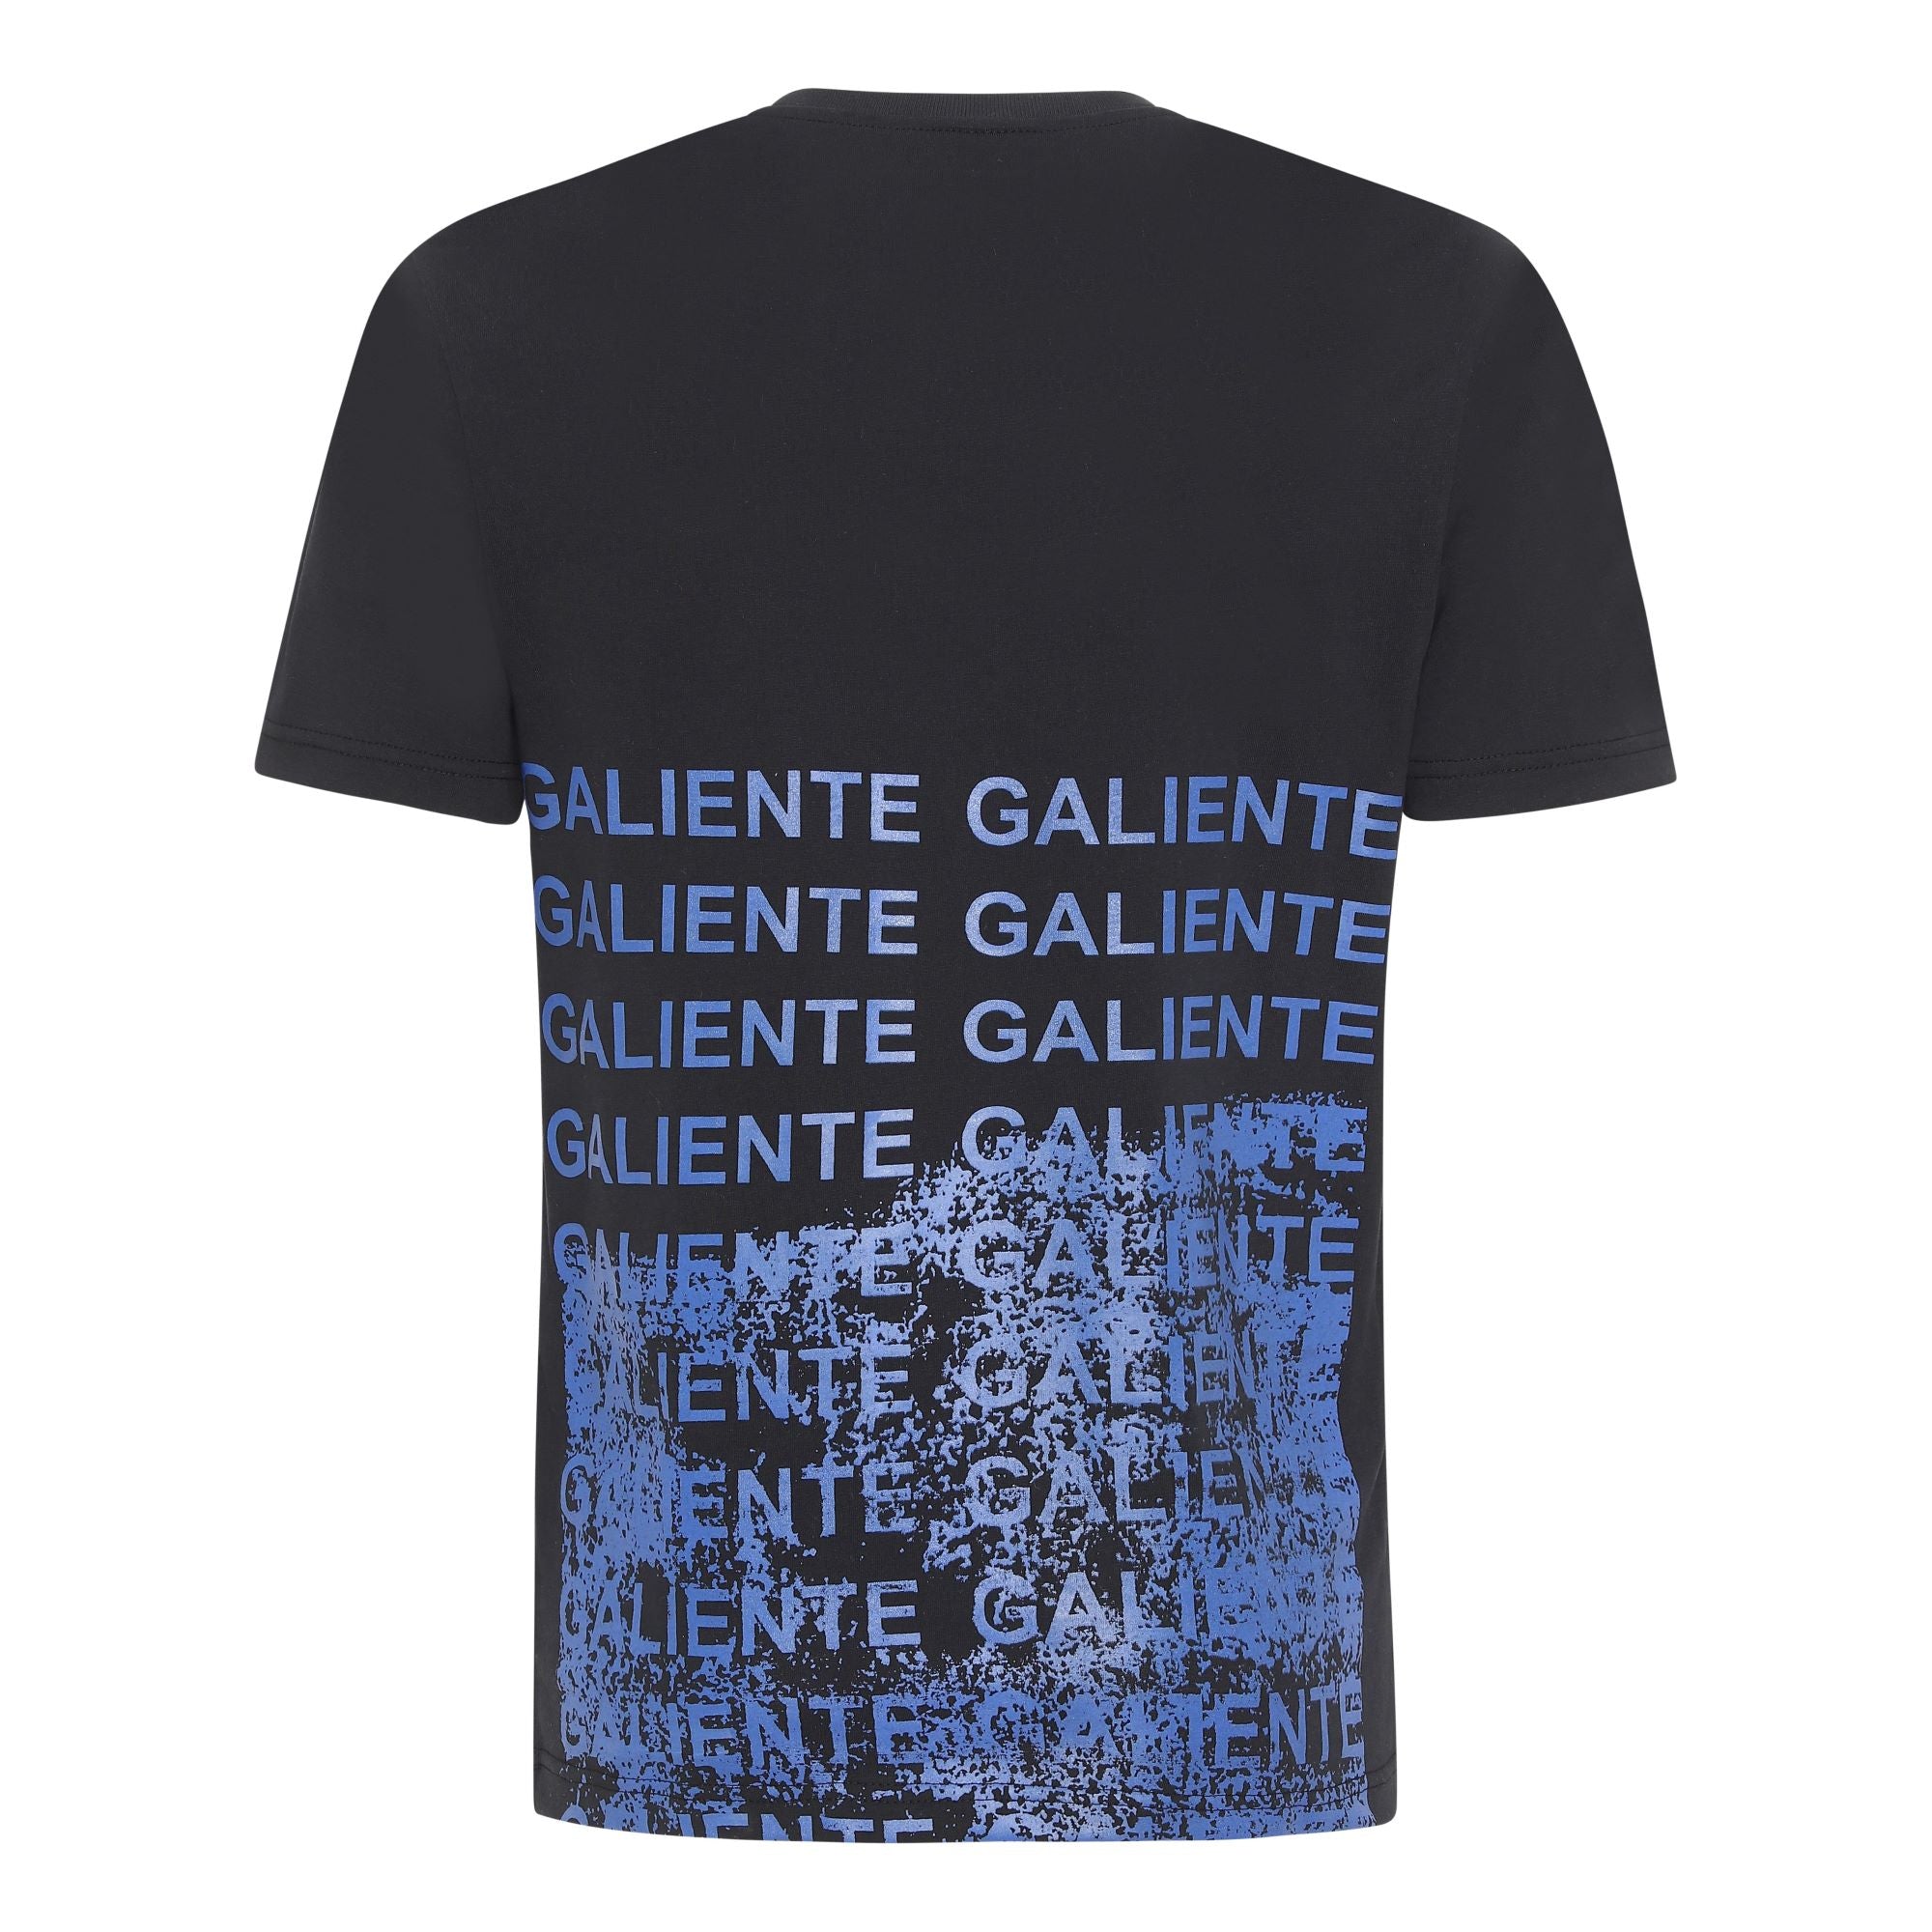 Black T-shirt with blue print